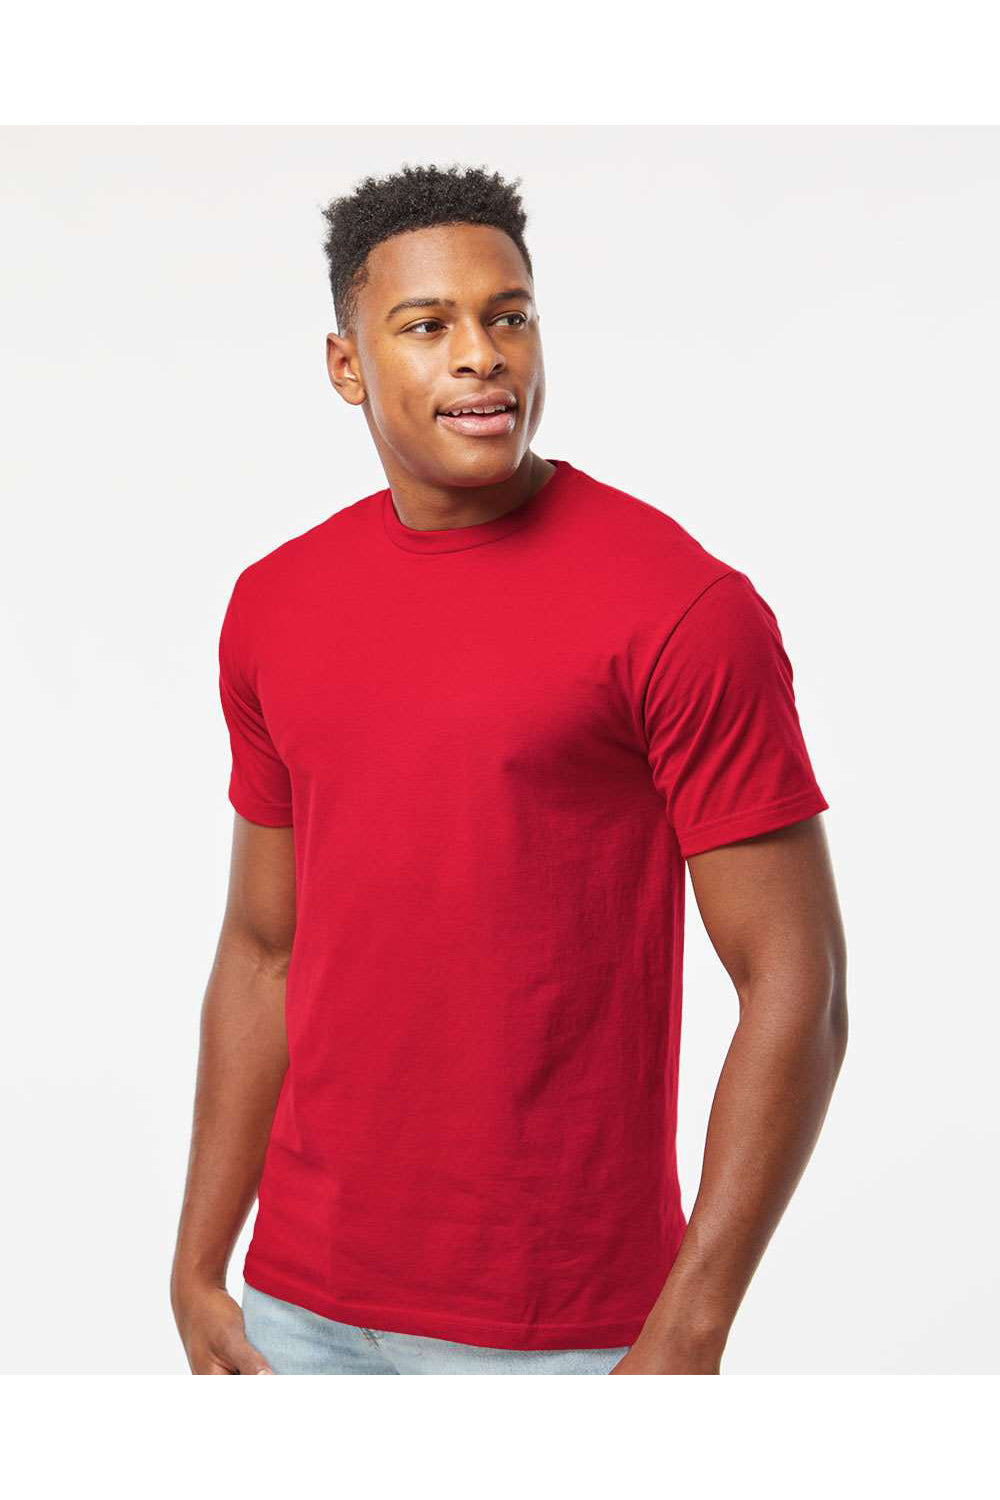 Tultex 290 Mens Jersey Short Sleeve Crewneck T-Shirt Cardinal Red Model Side